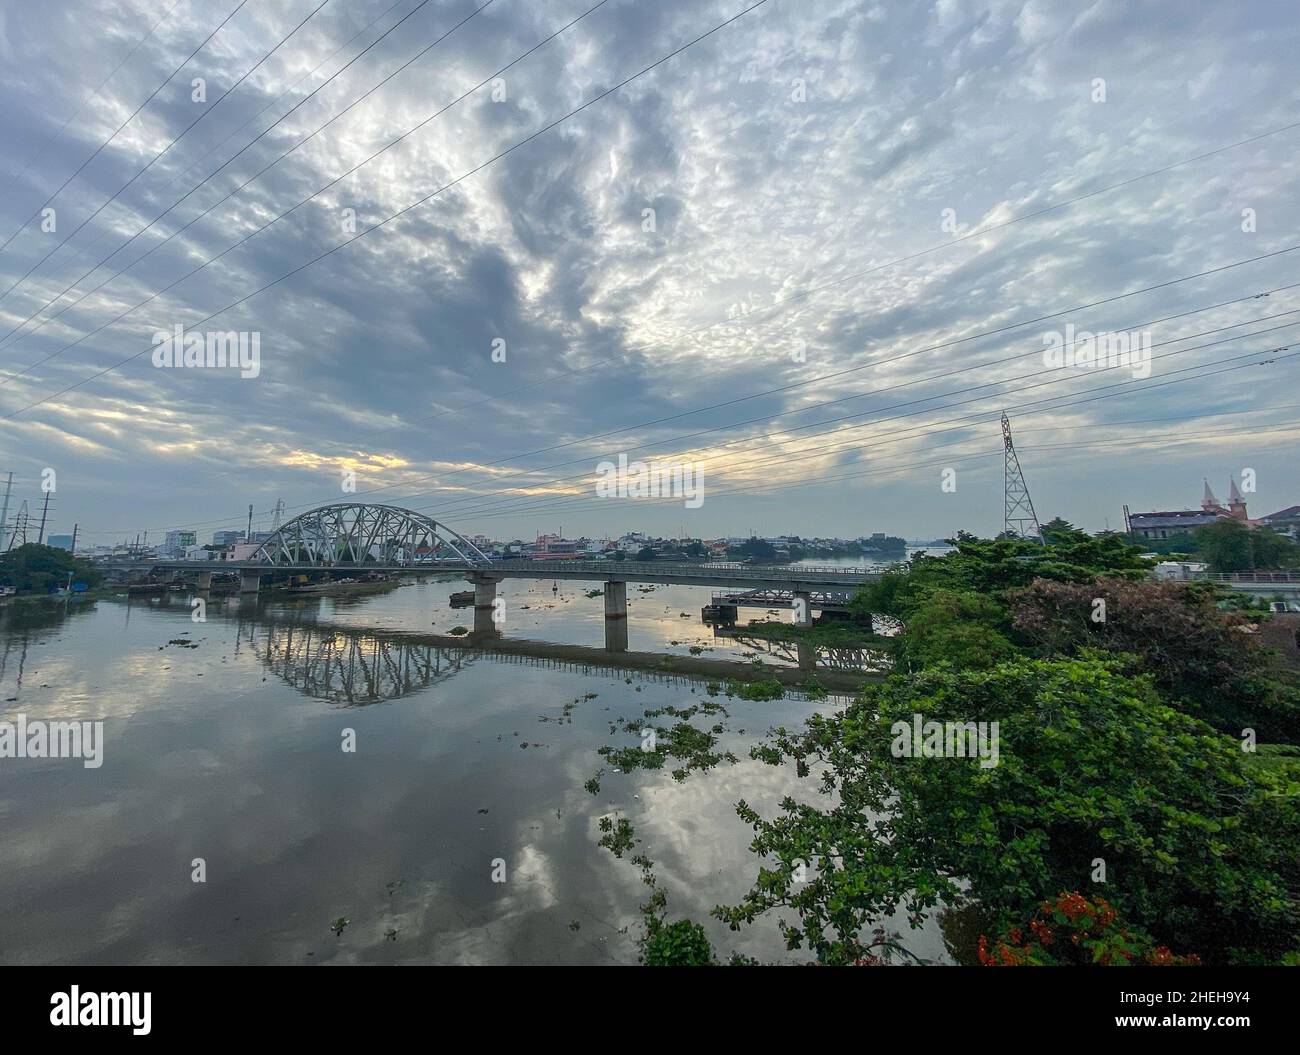 Saigon, Vietnam - Jul 8, 2020. View of Saigon River and Binh Loi railway bridge. Saigon (called Ho Chi Minh city) is the biggest city in Vietnam. Stock Photo